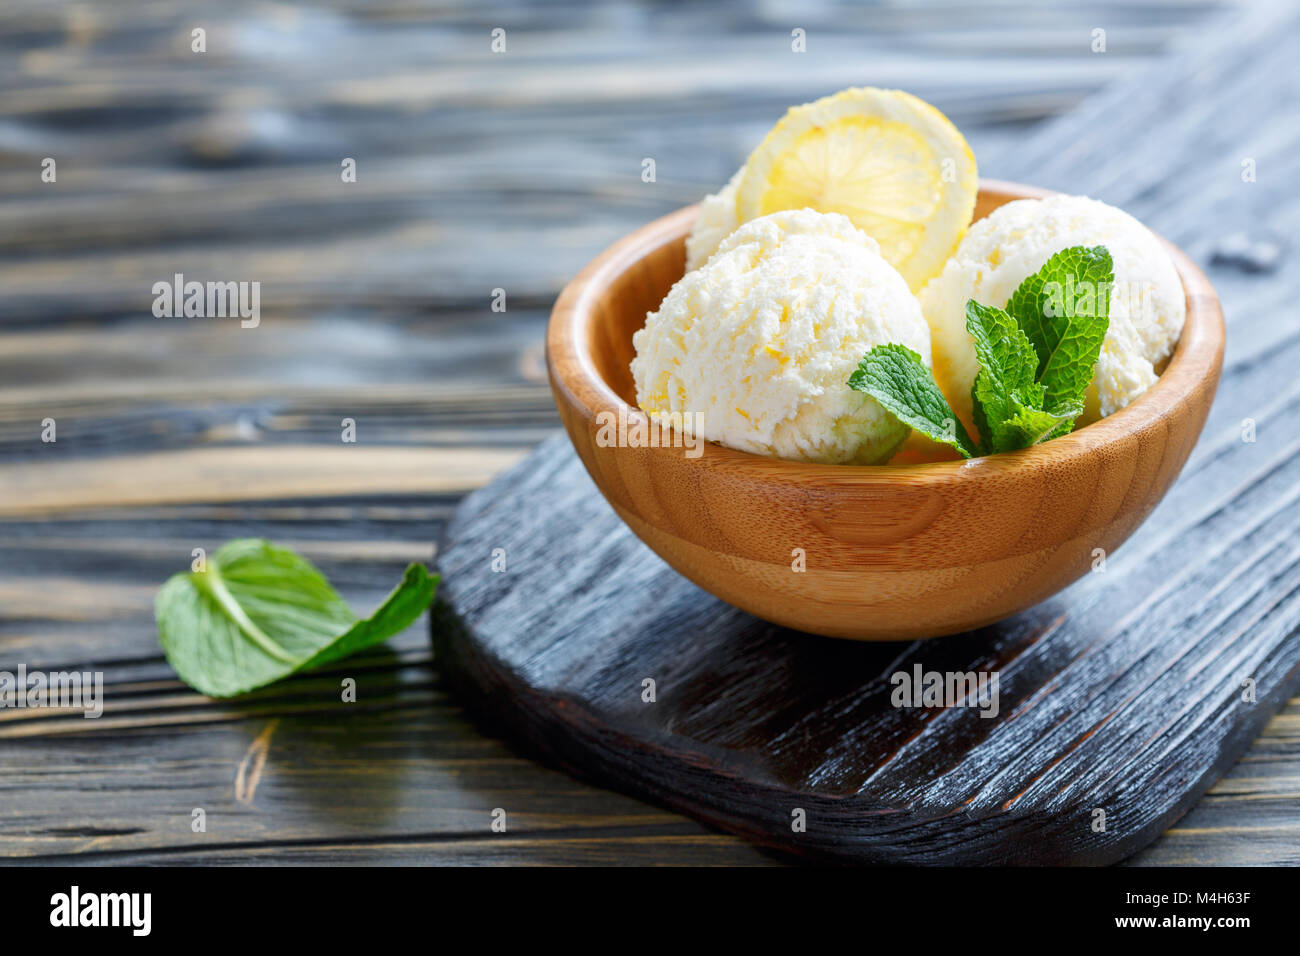 Homemade lemon ice cream and mint leaves. Stock Photo